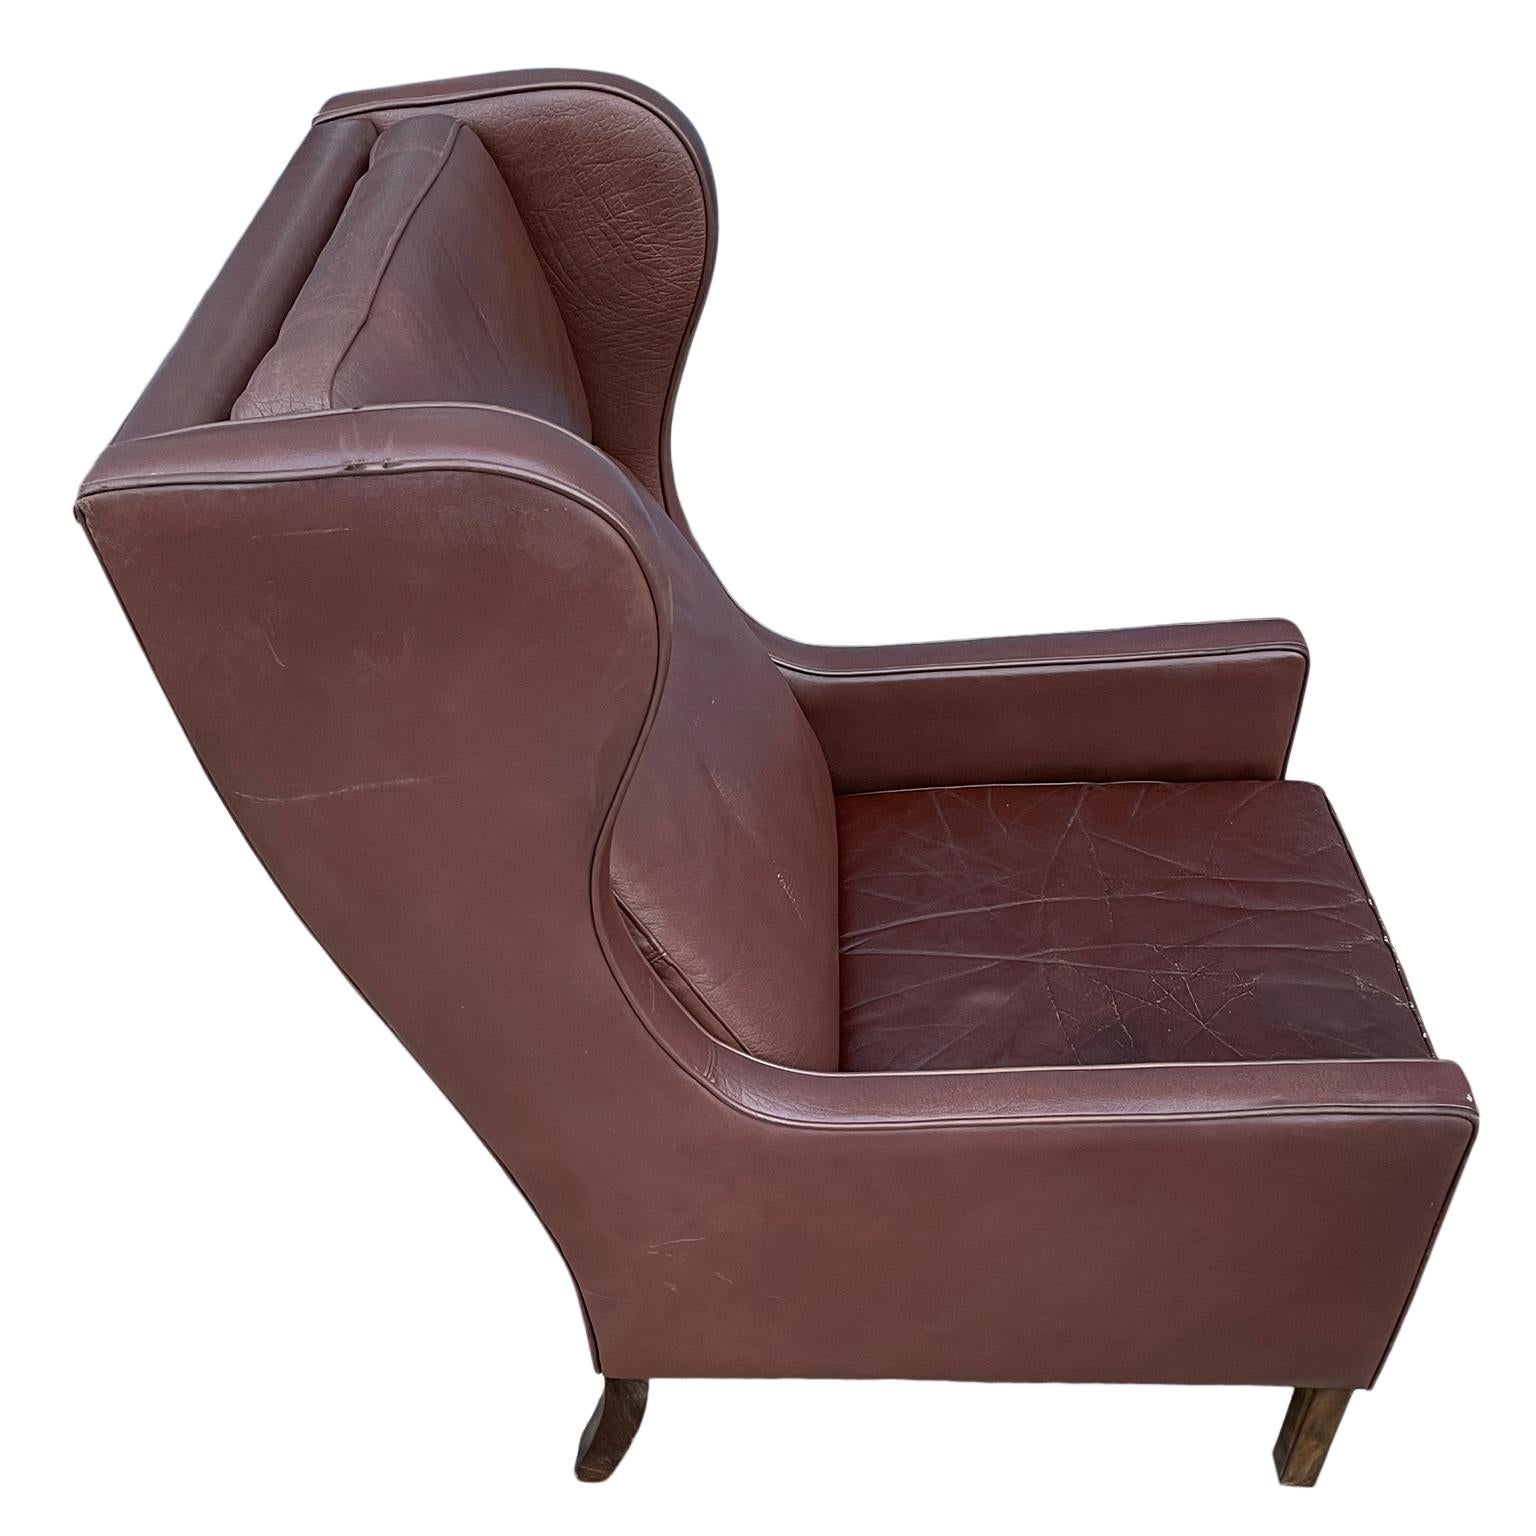 Mid-Century Modern Midcentury Danish Modern Wingback Leather Chair by Børge Mogensen